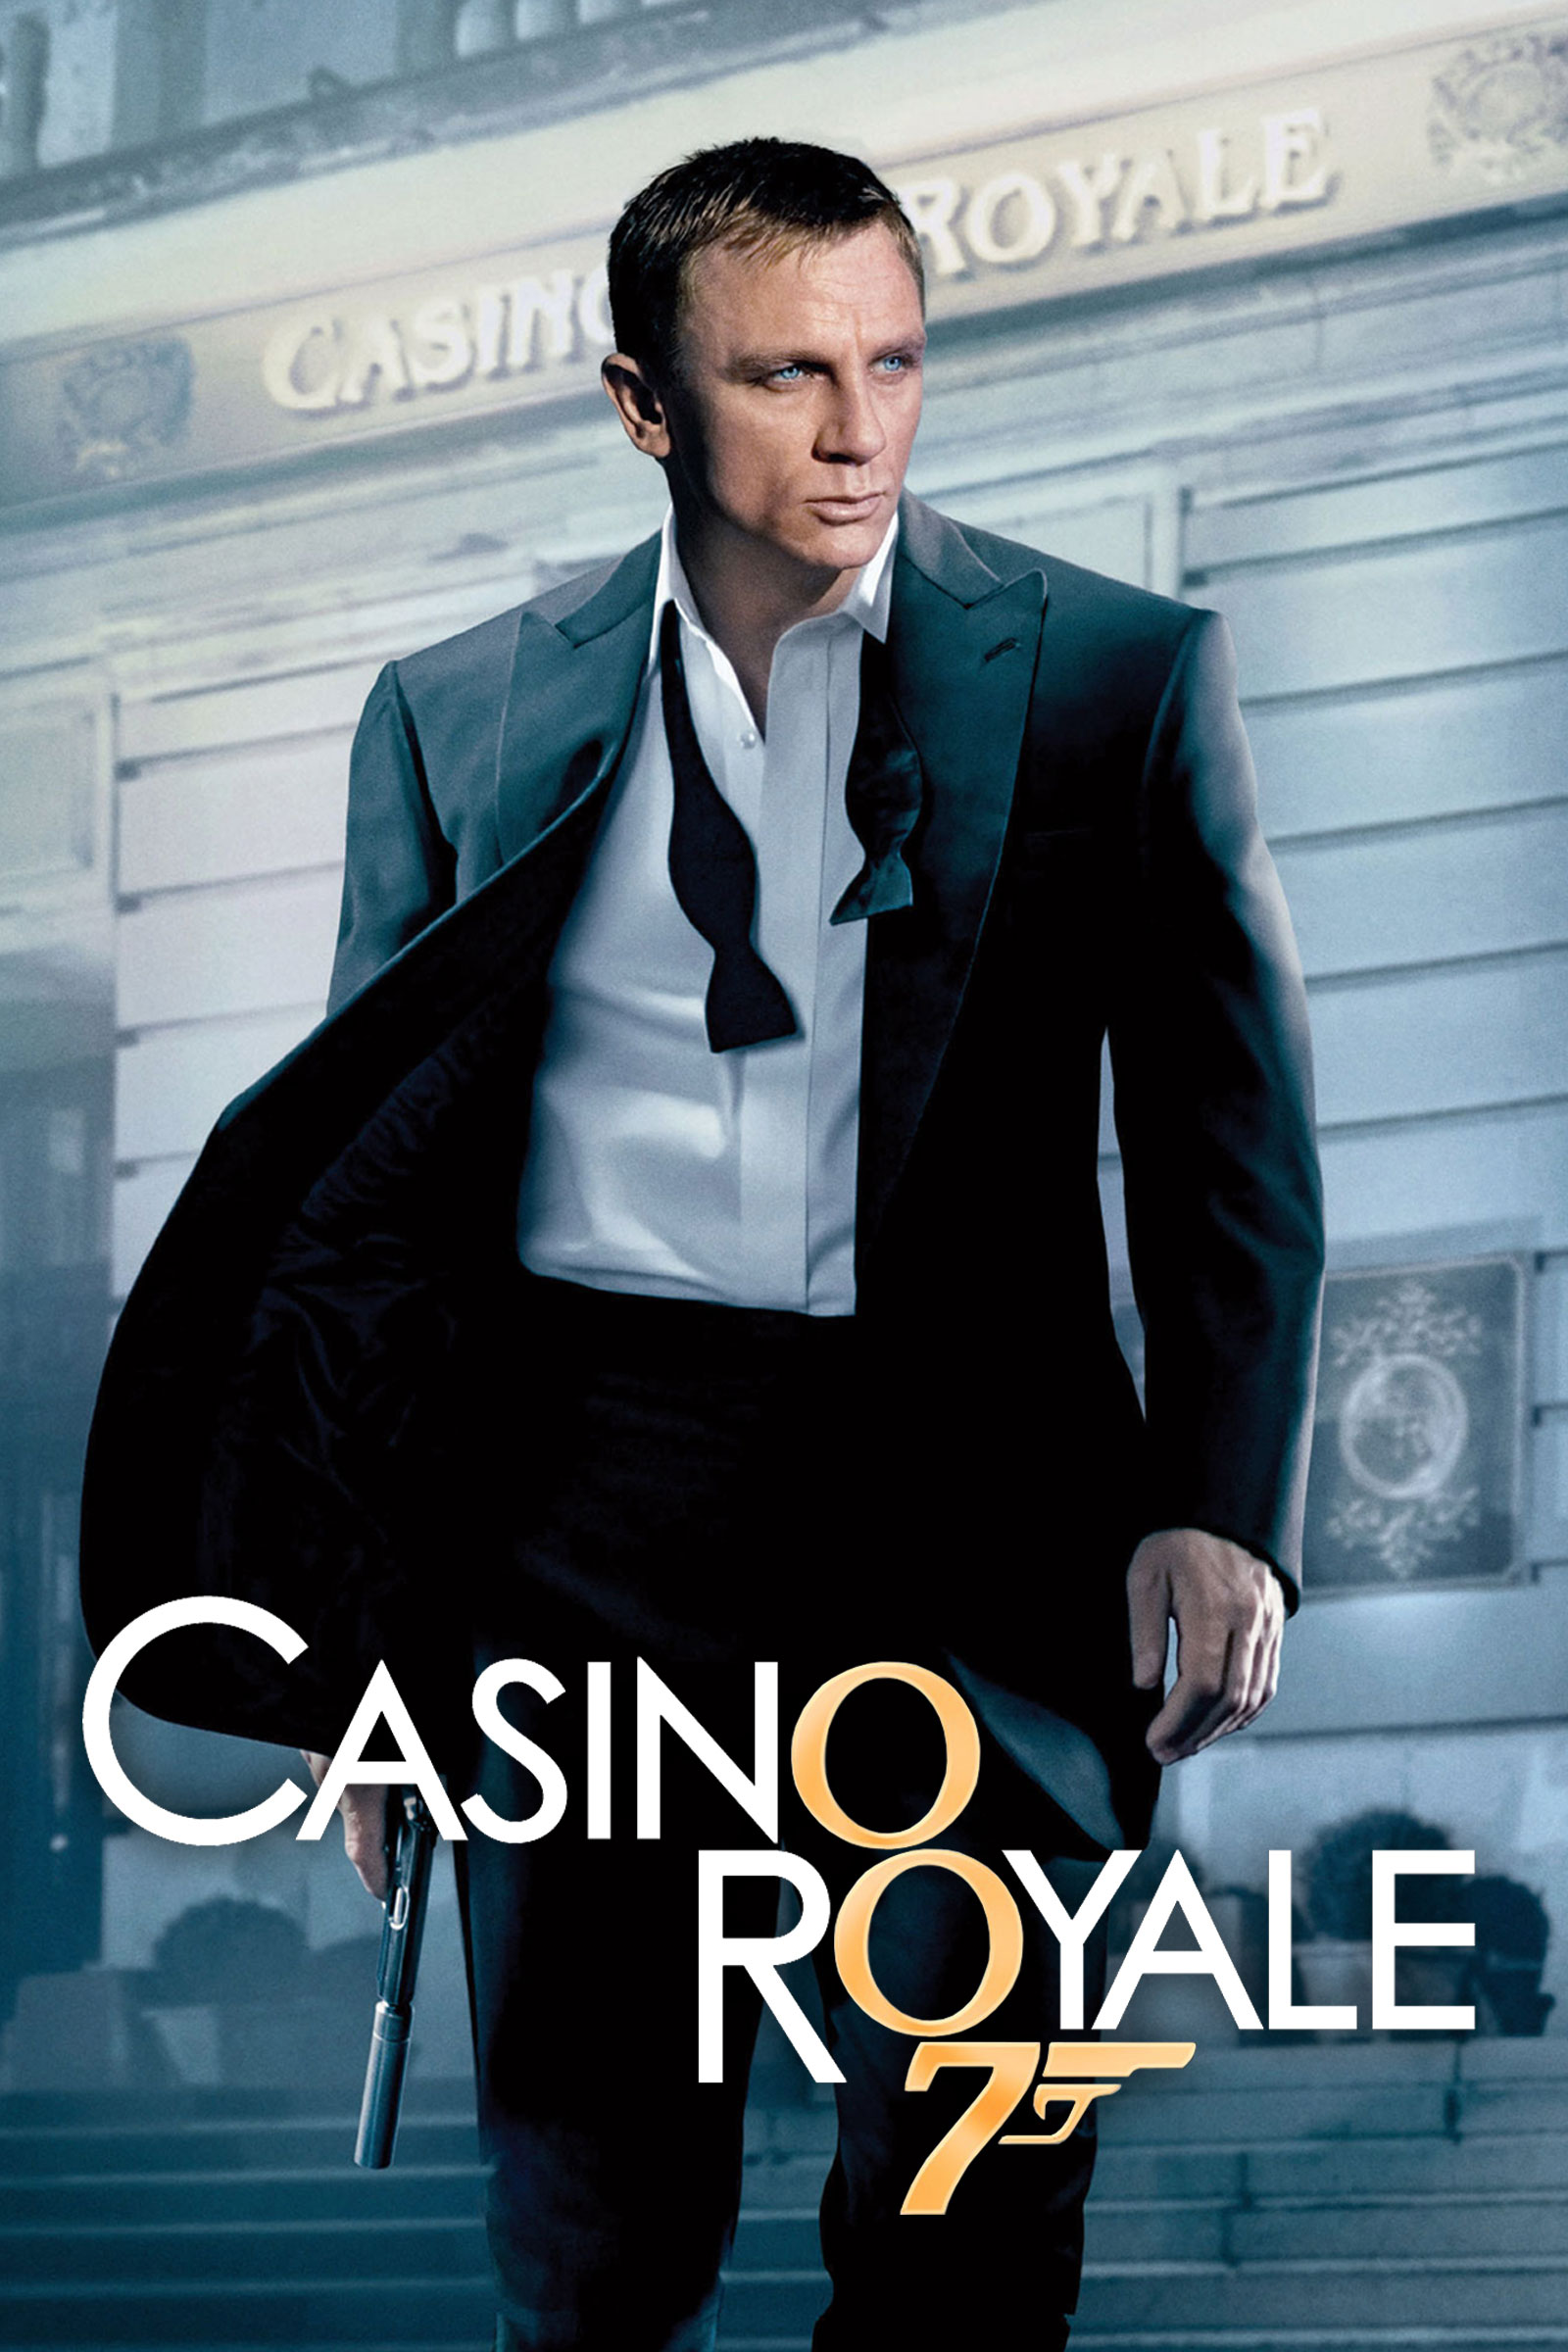 film location casino royale james bond